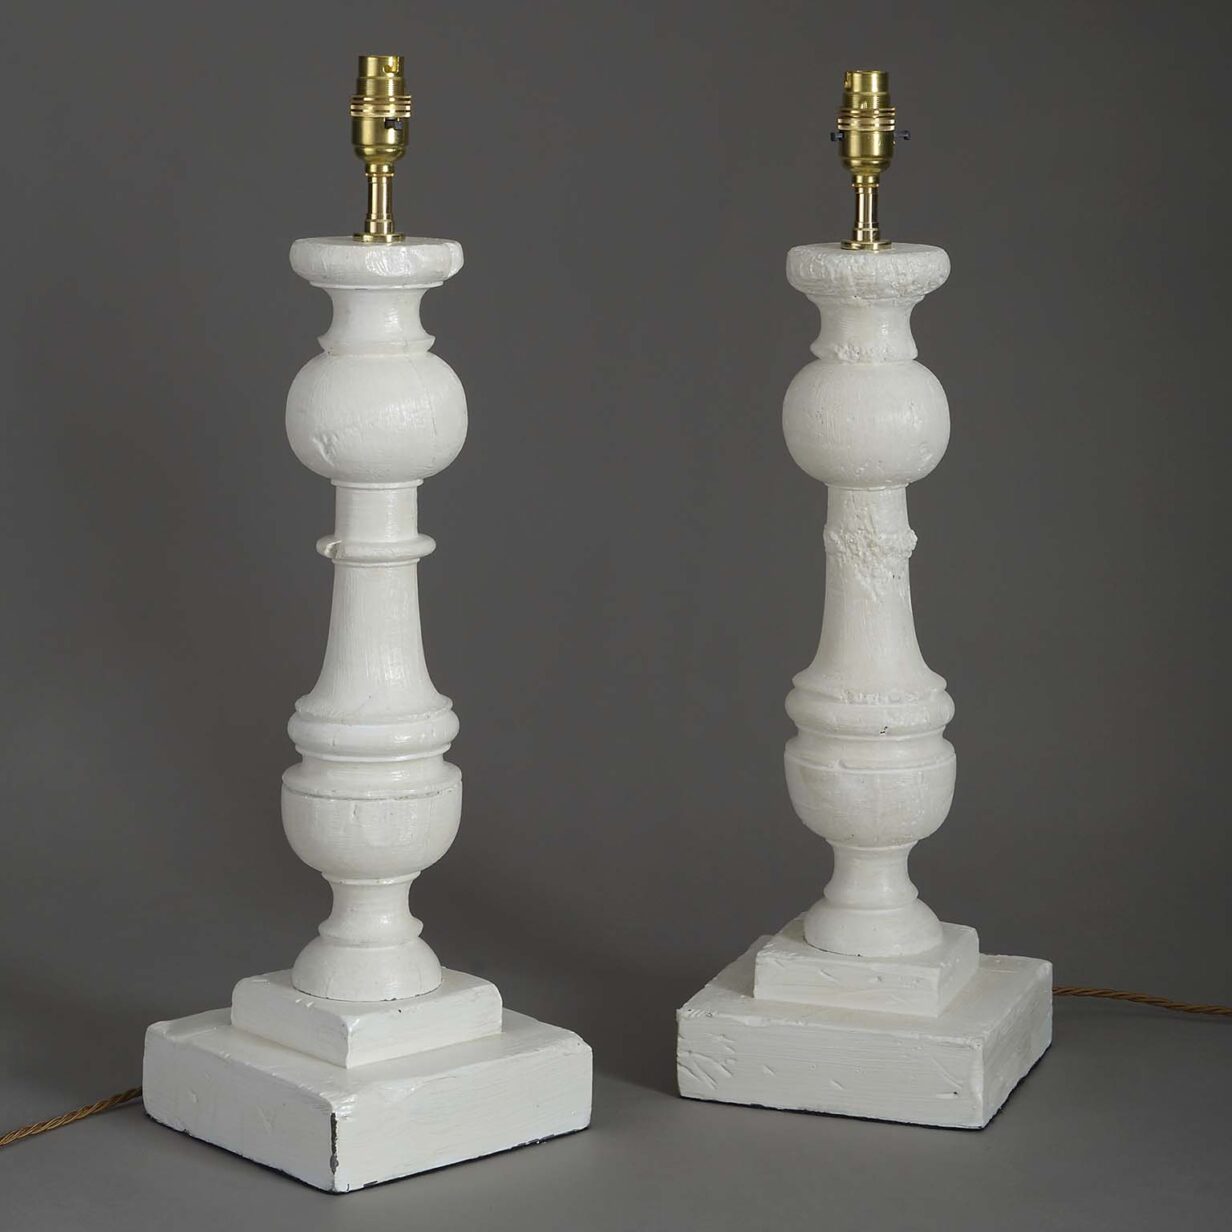 Pair of balustrade lamps